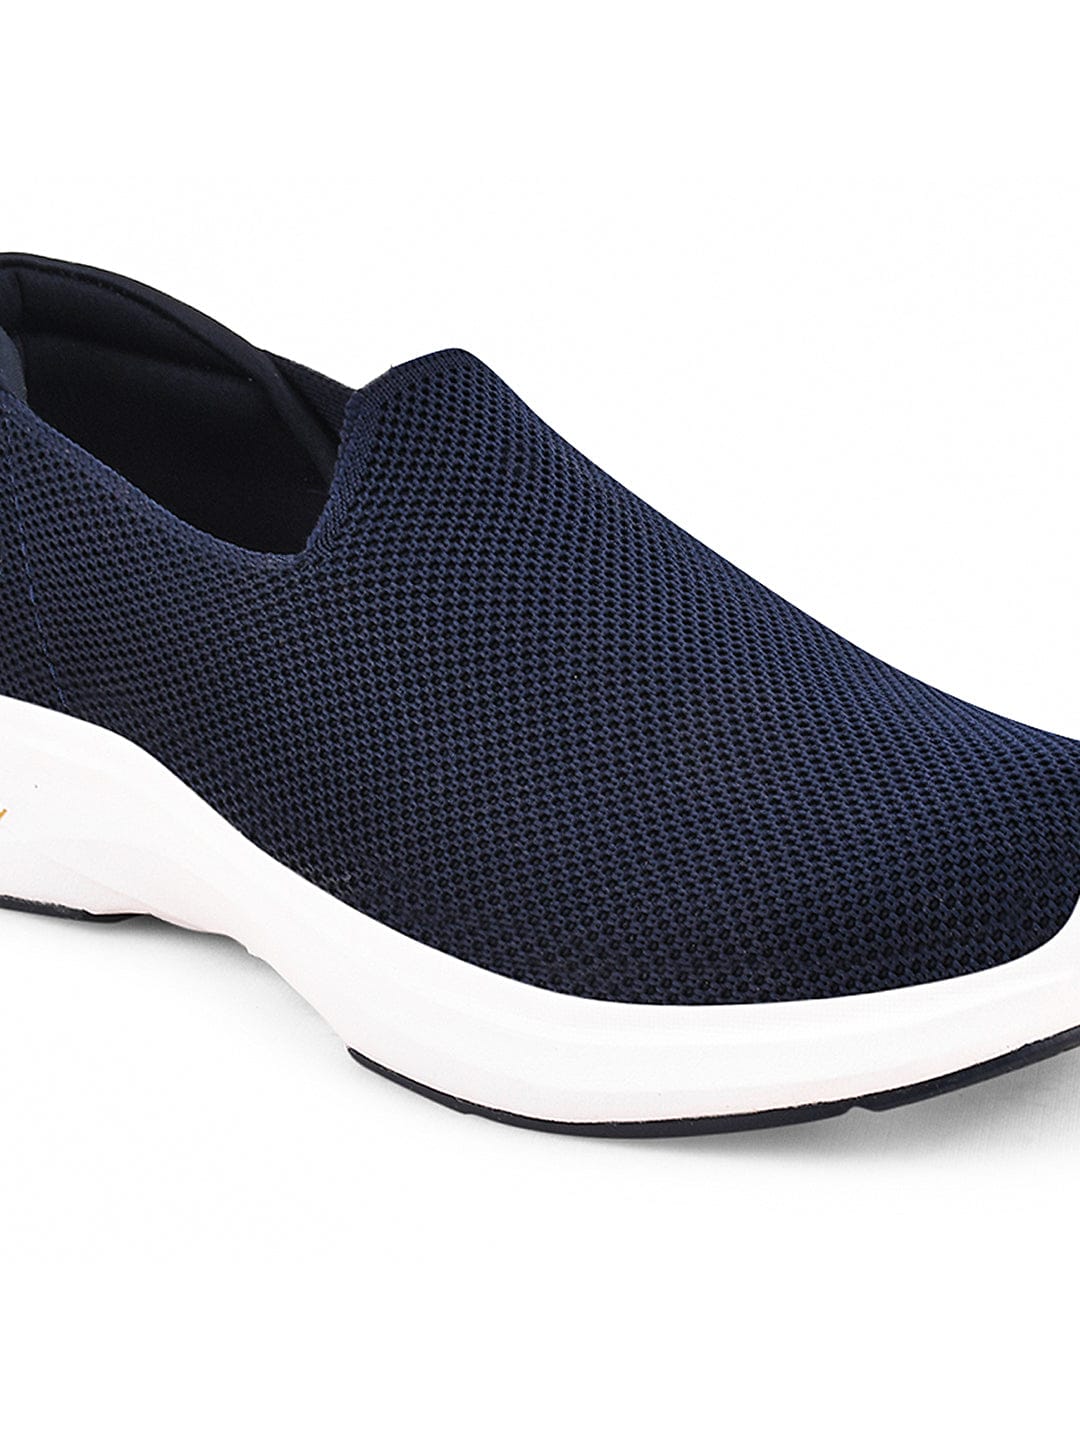 Buy MAXWIN Blue Men's Casual Shoes online | Campus Shoes